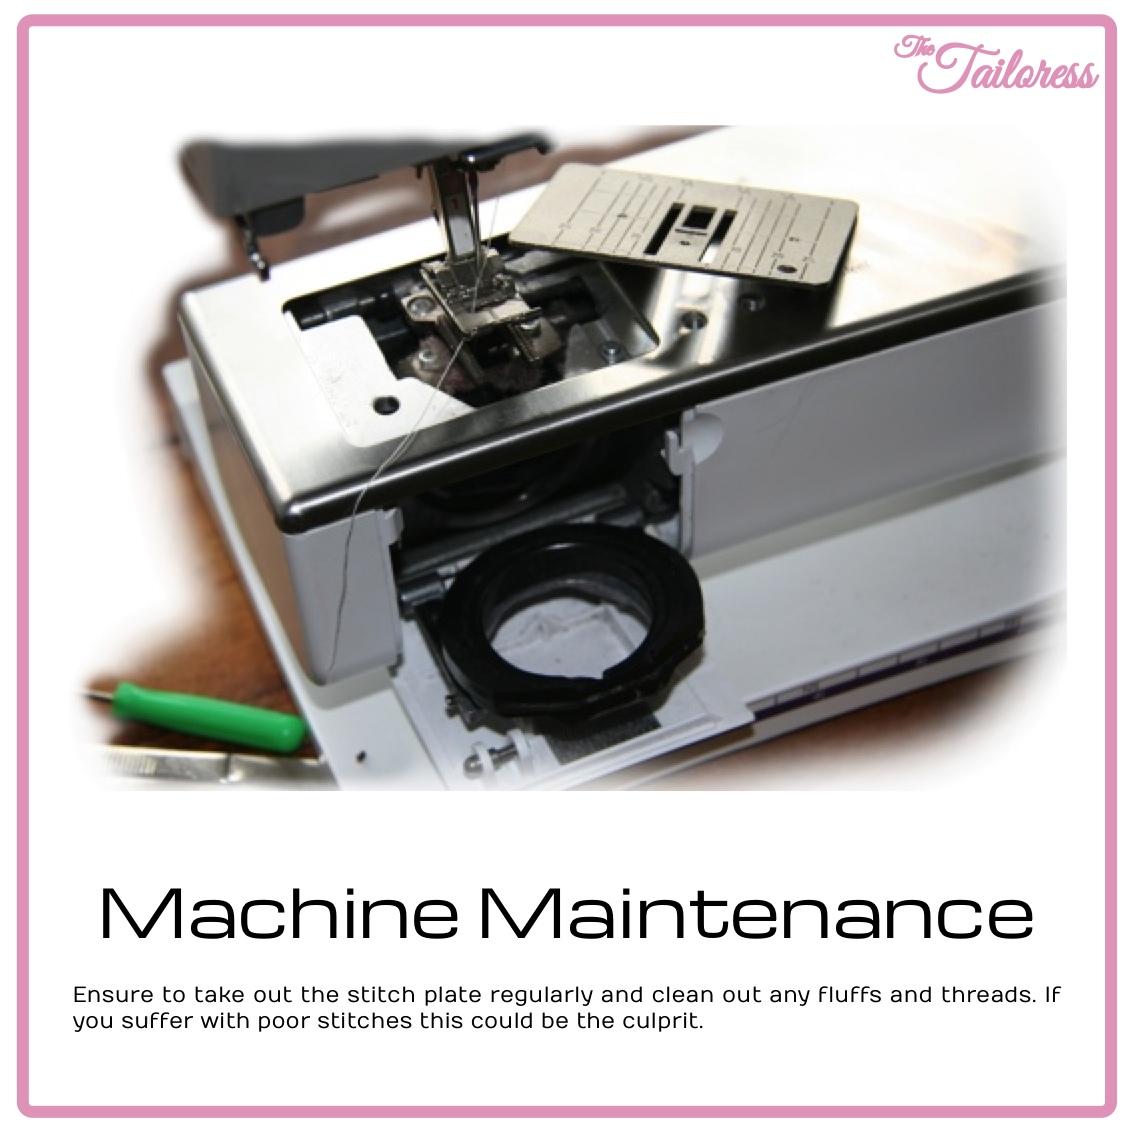 Sewing Machine Maintenance Tip - The Tailoress PDF Sewing Patterns